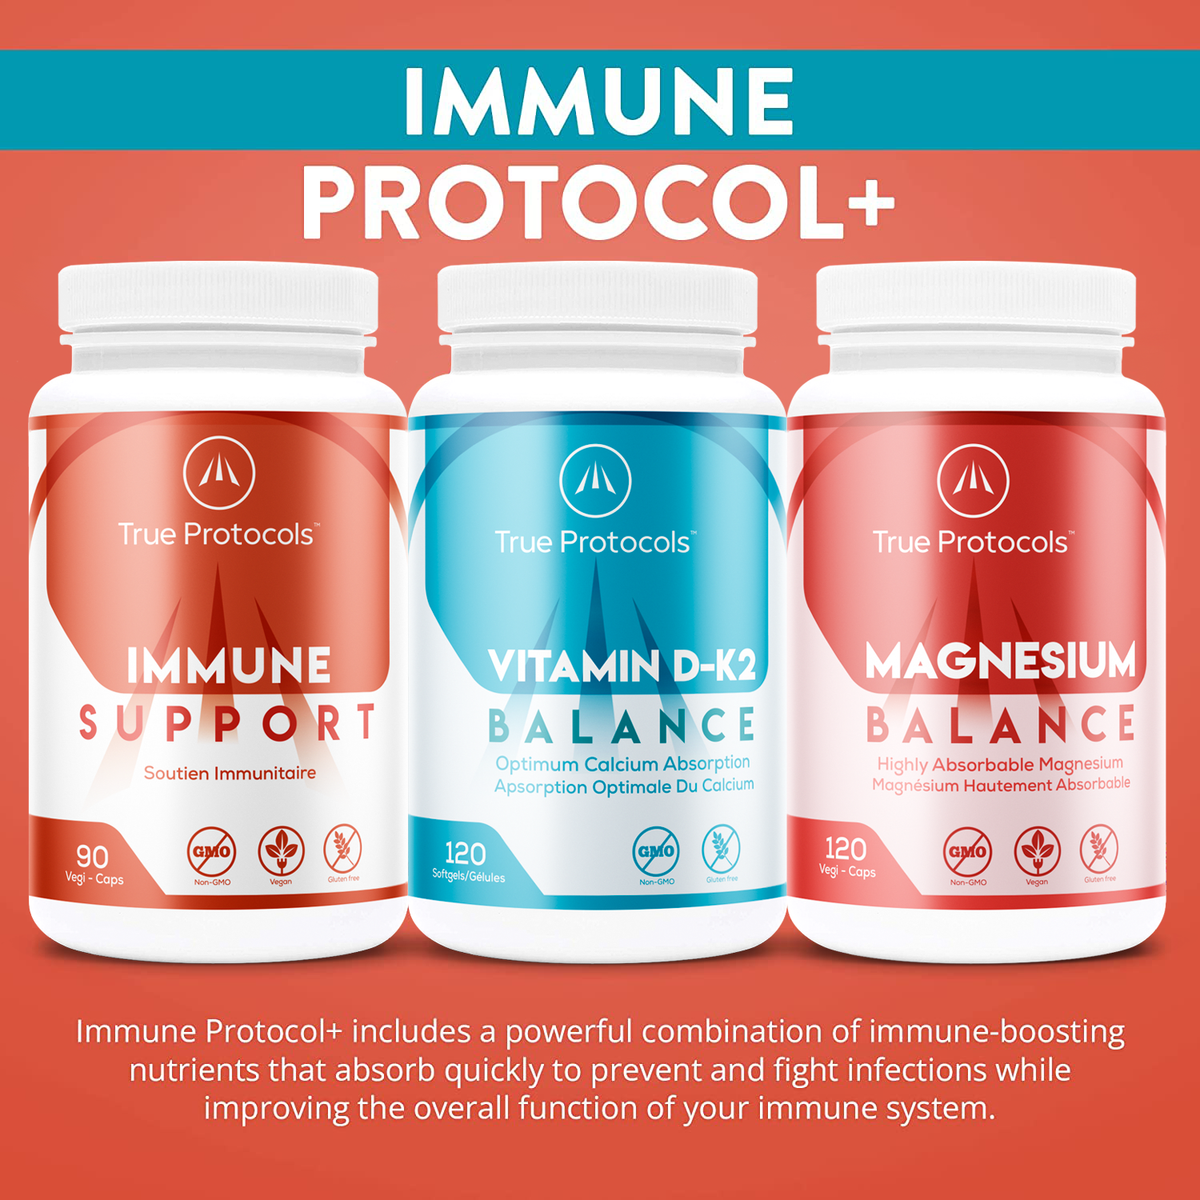 Immune Protocol+ - Magnesium Balance, Immune Support &amp; Vitamin D-K2 Balance for Optimal Immune Support &amp; Function